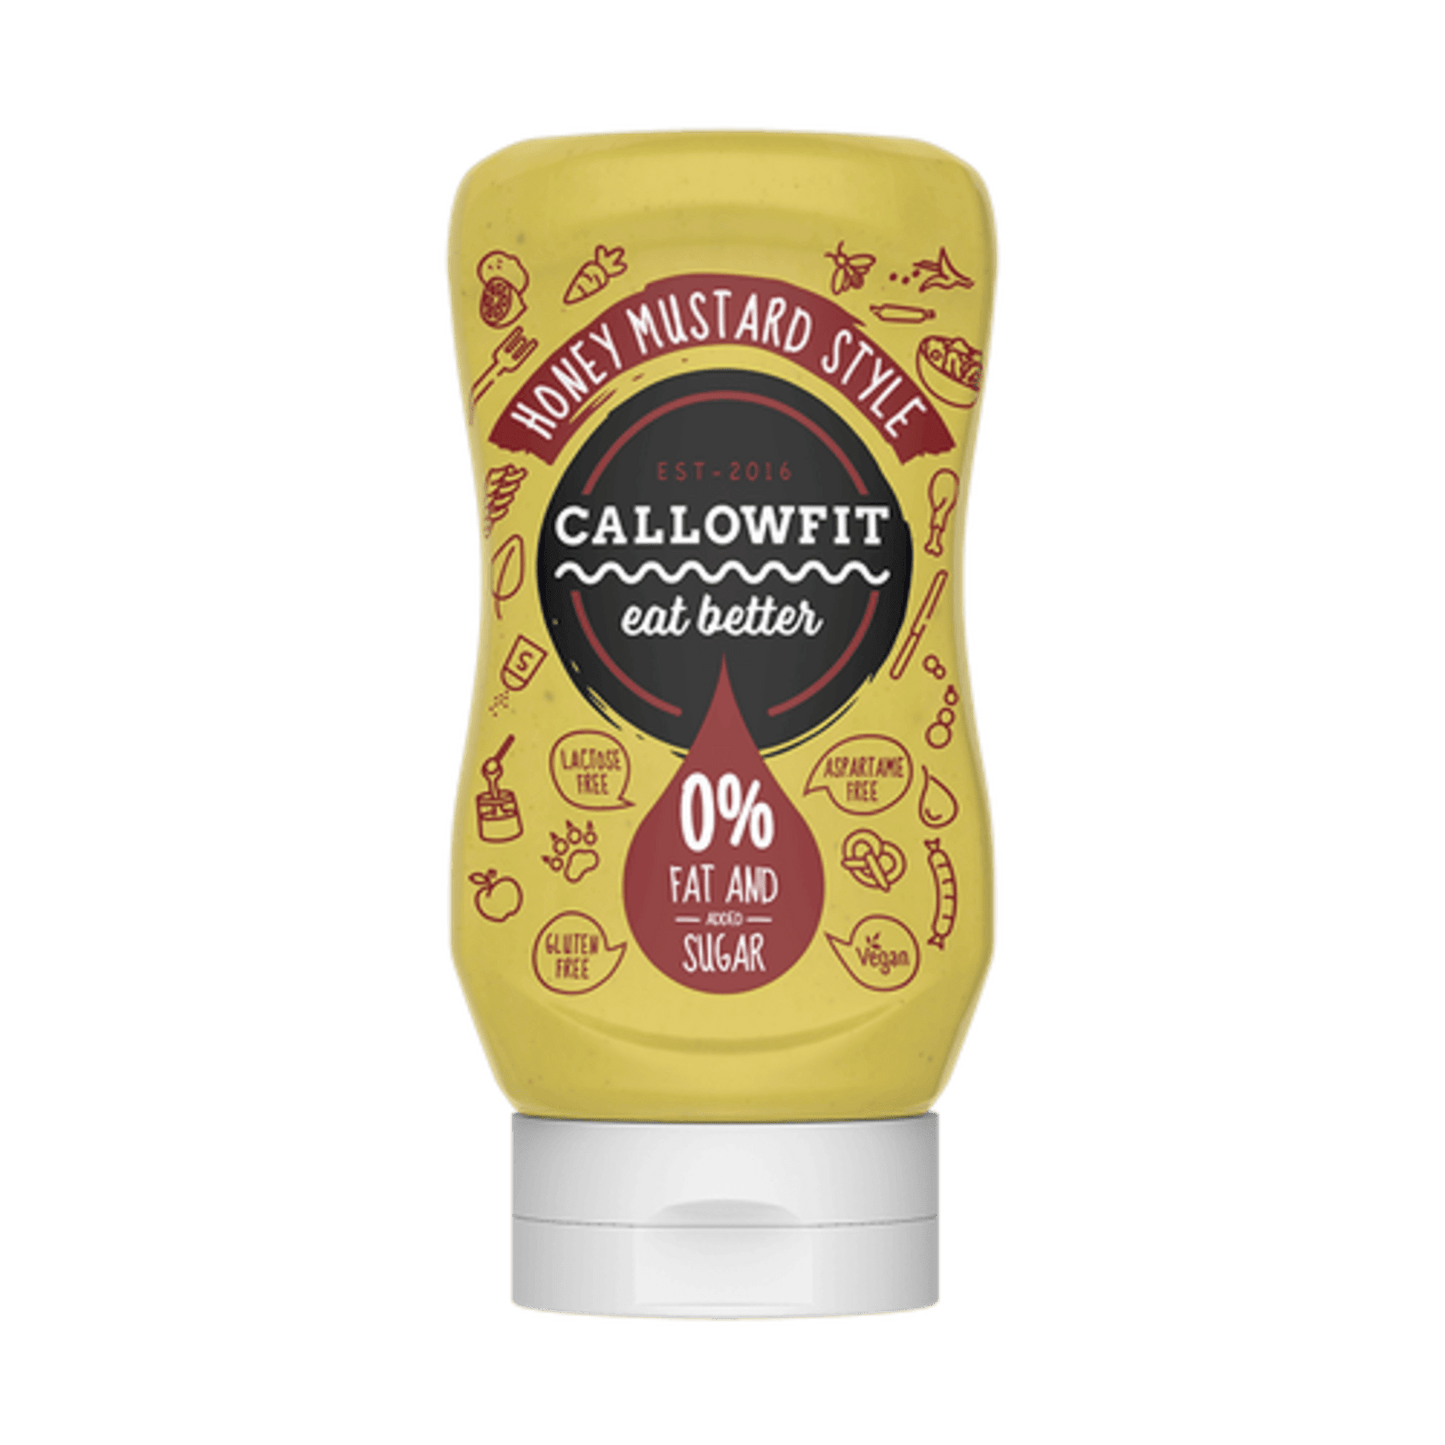 Callowfit Honey-Mustard Style Sauce 300ml